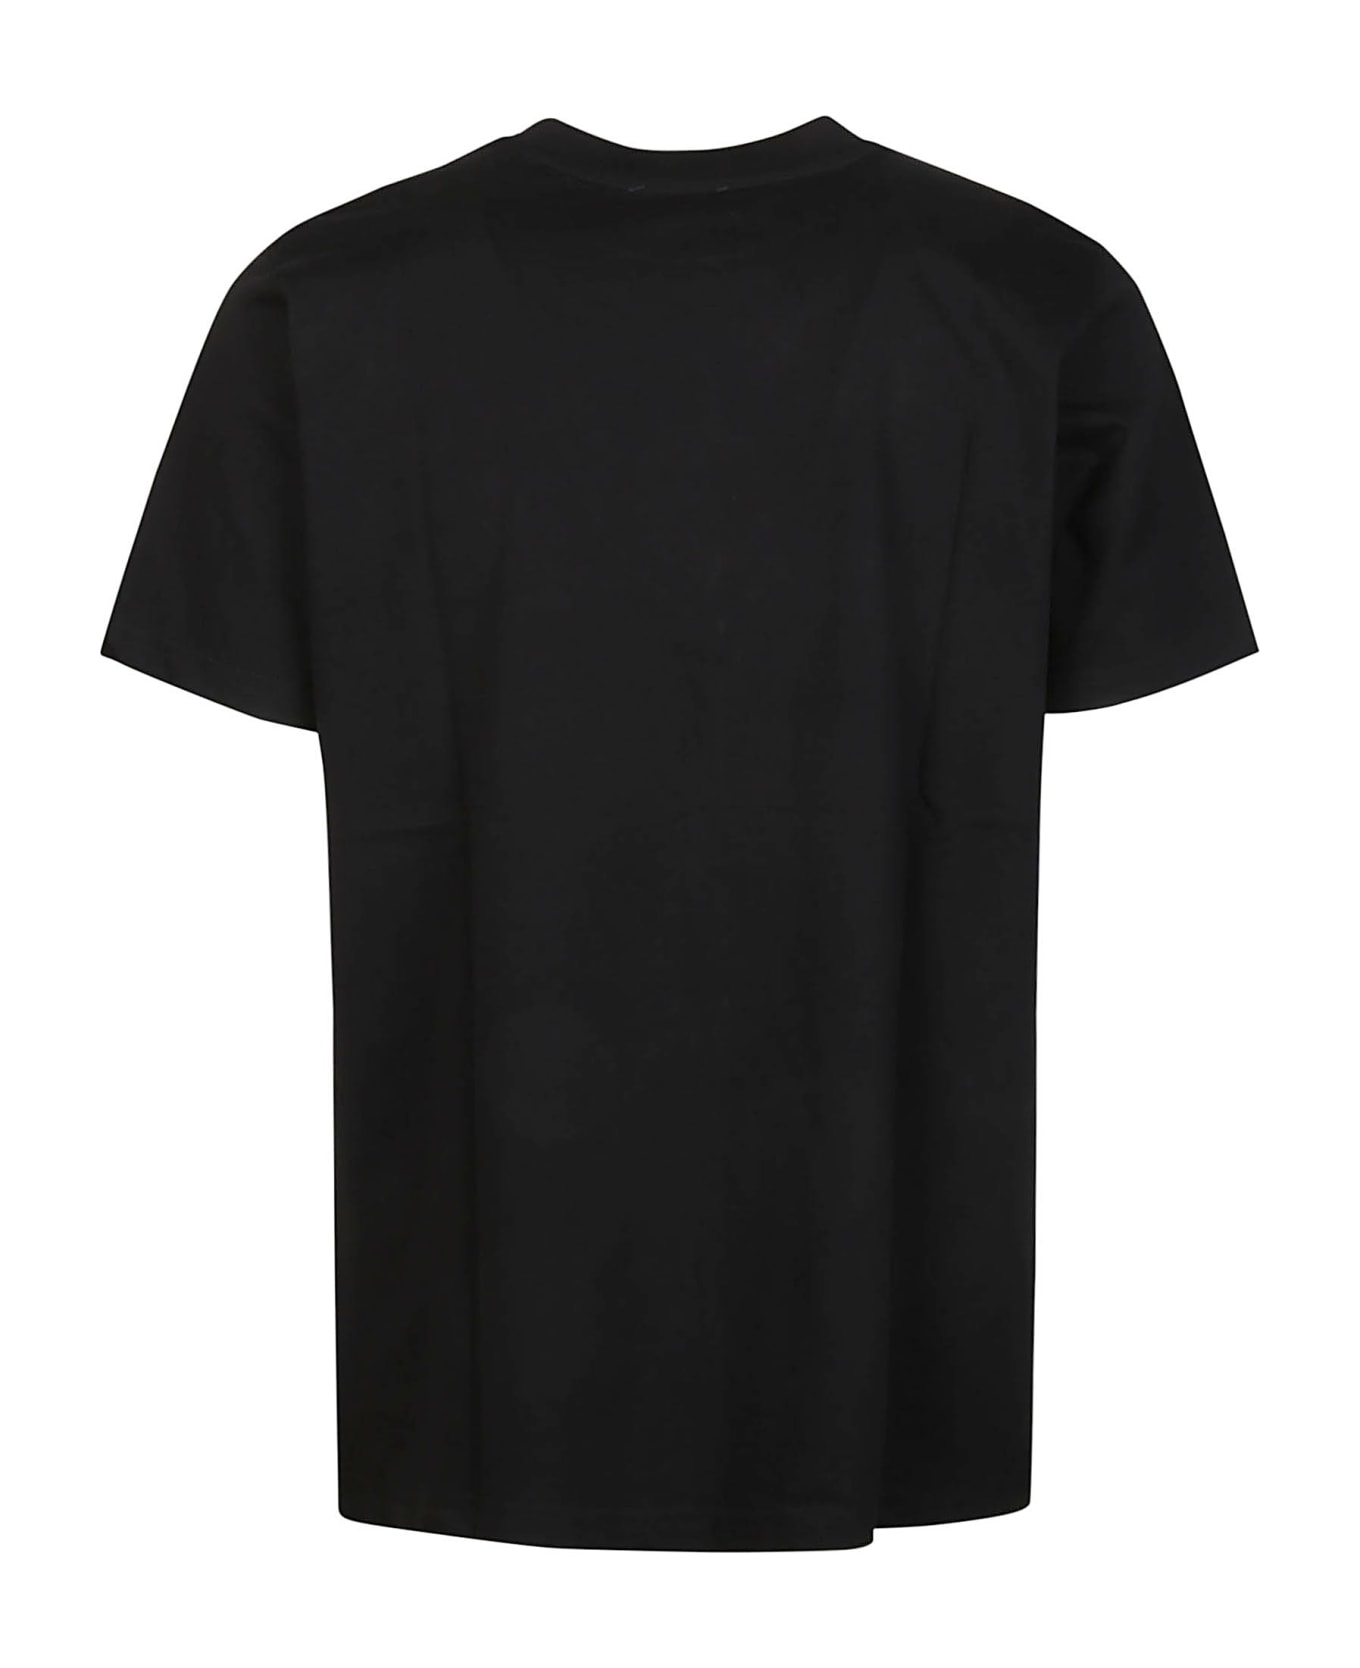 Family First Milano Heart T-shirt - Black シャツ